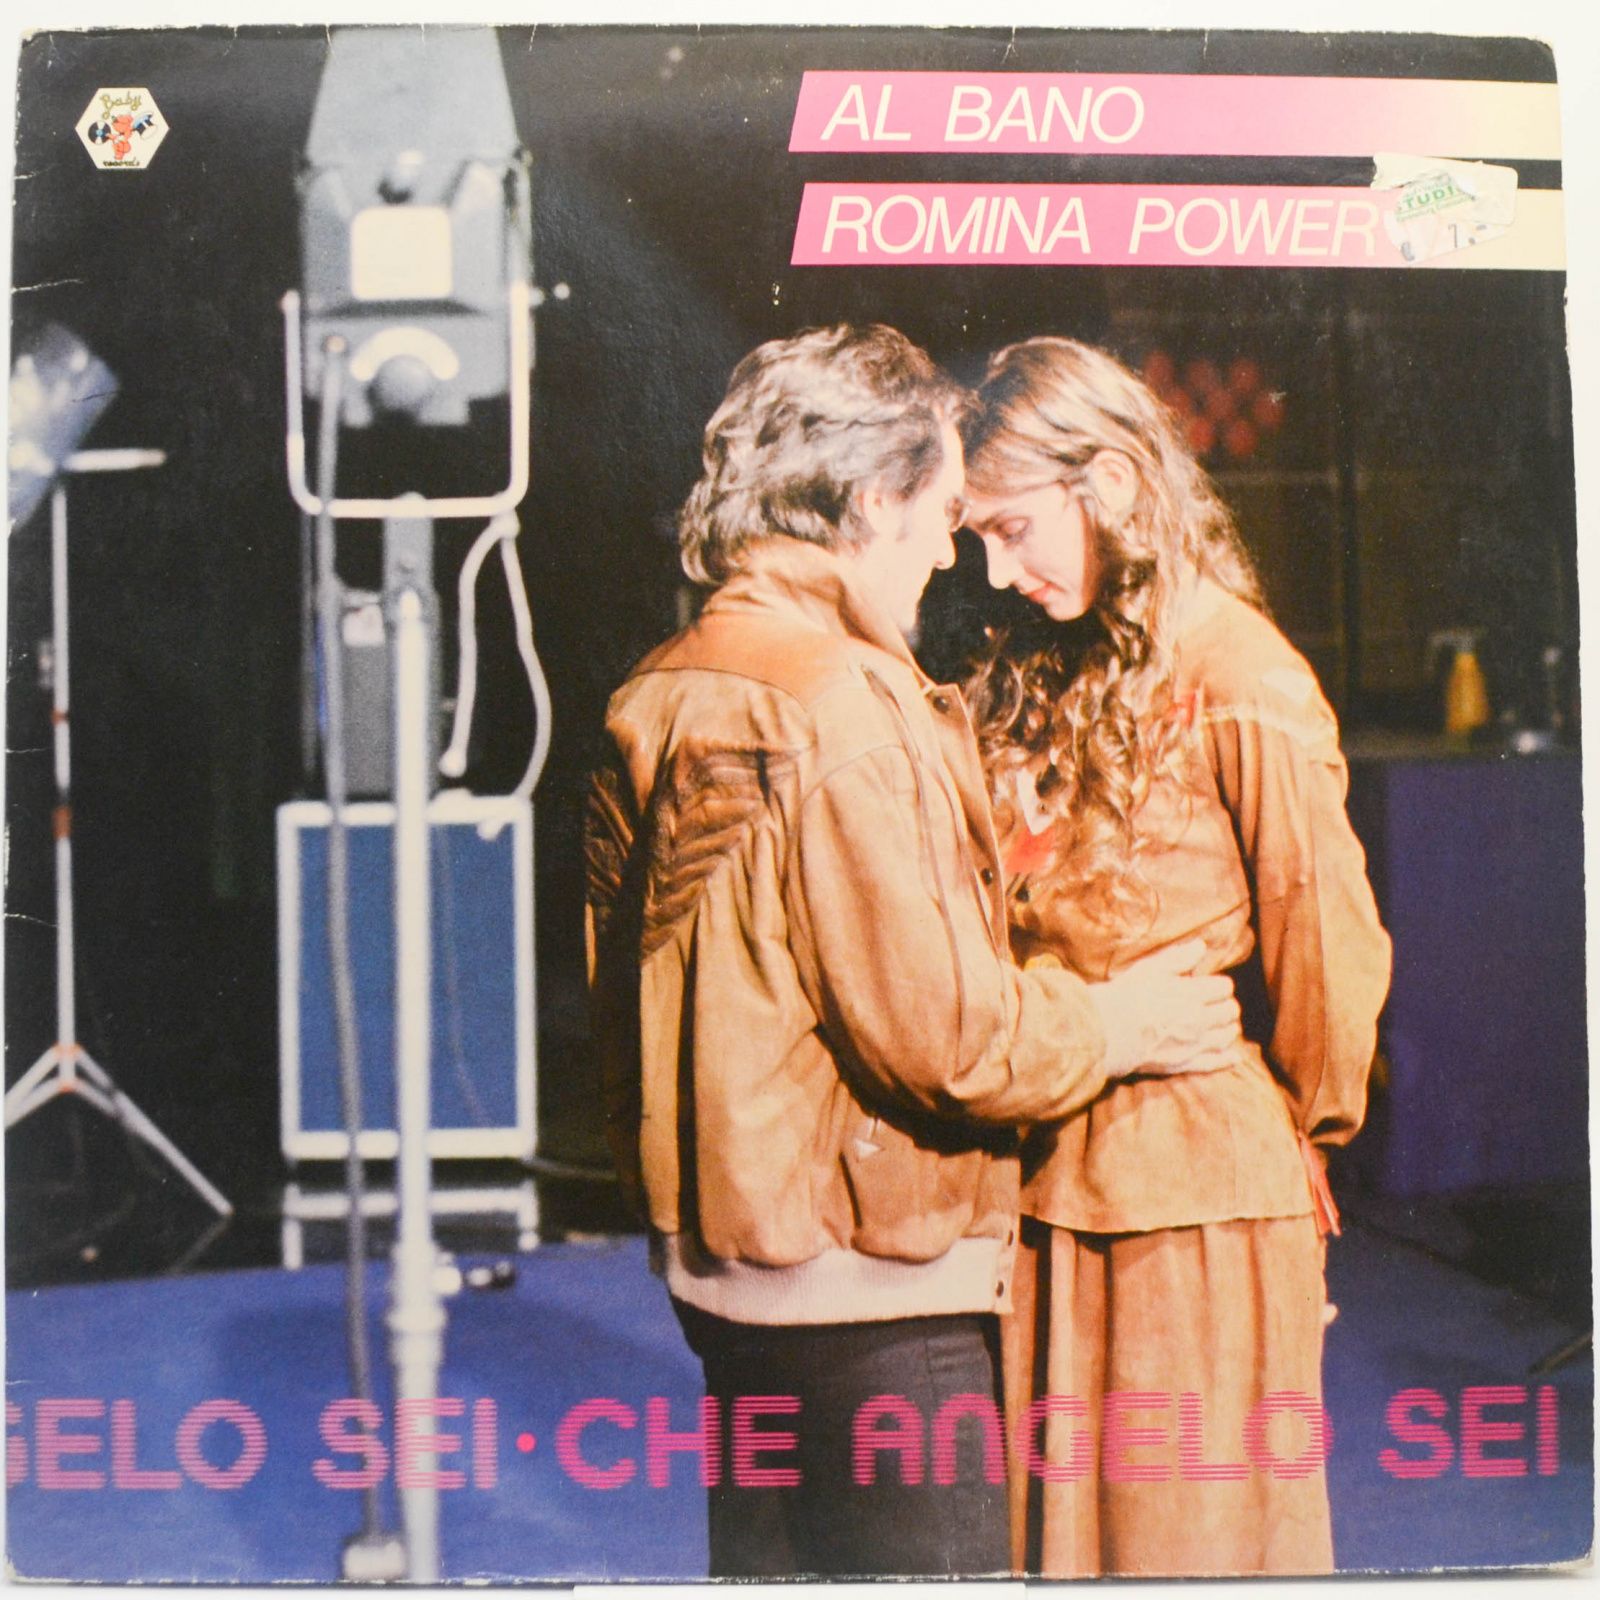 Al Bano & Romina Power — Che Angelo Sei, 1982